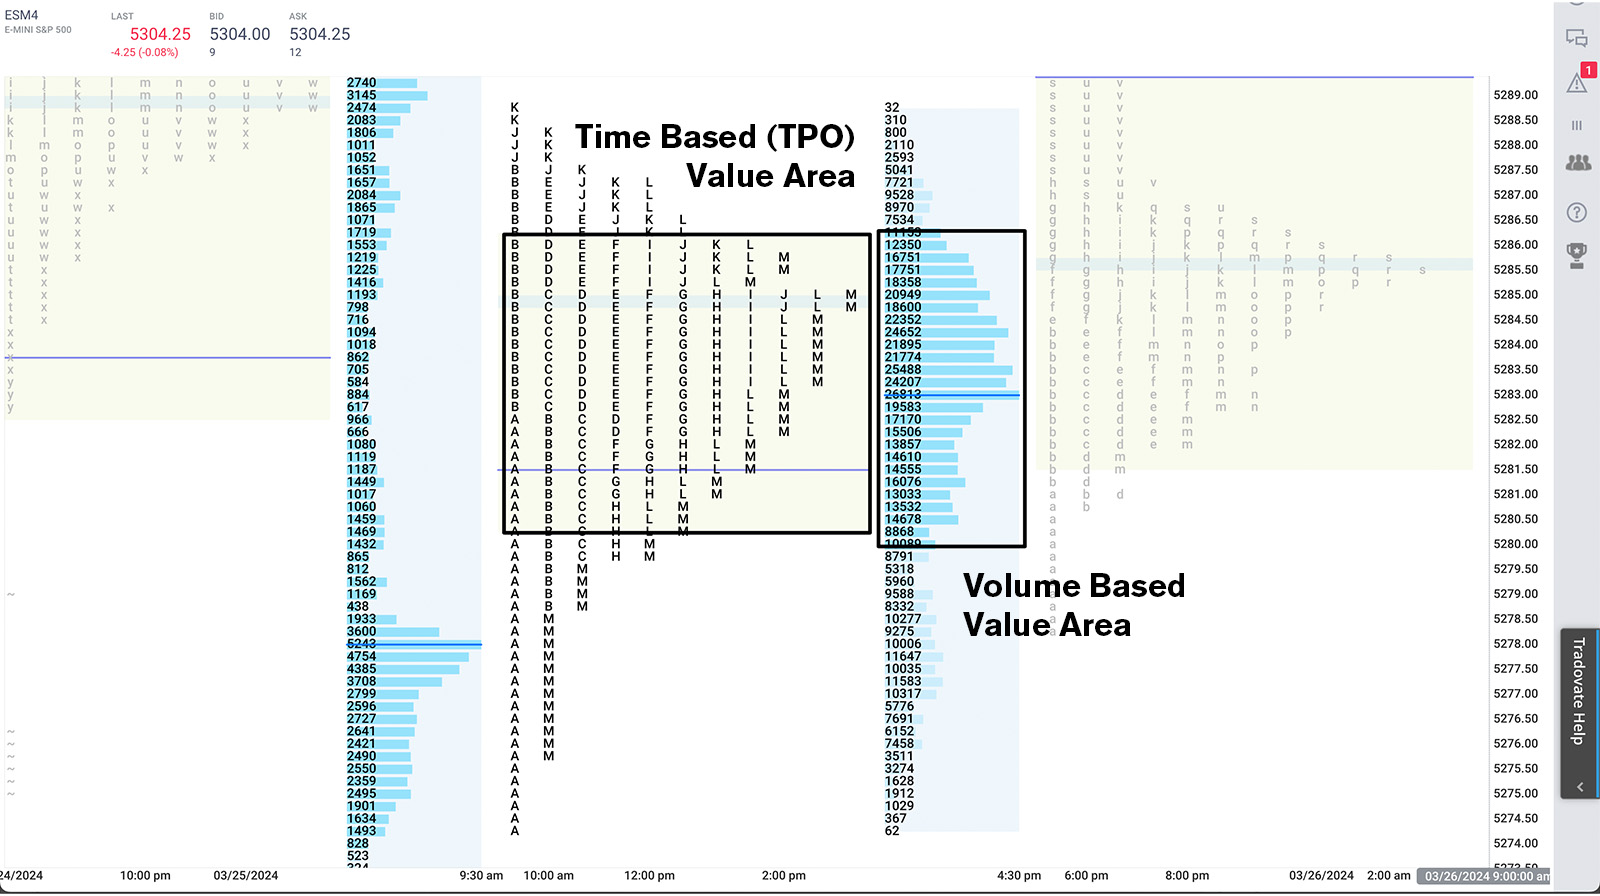 volume value area vs time value area